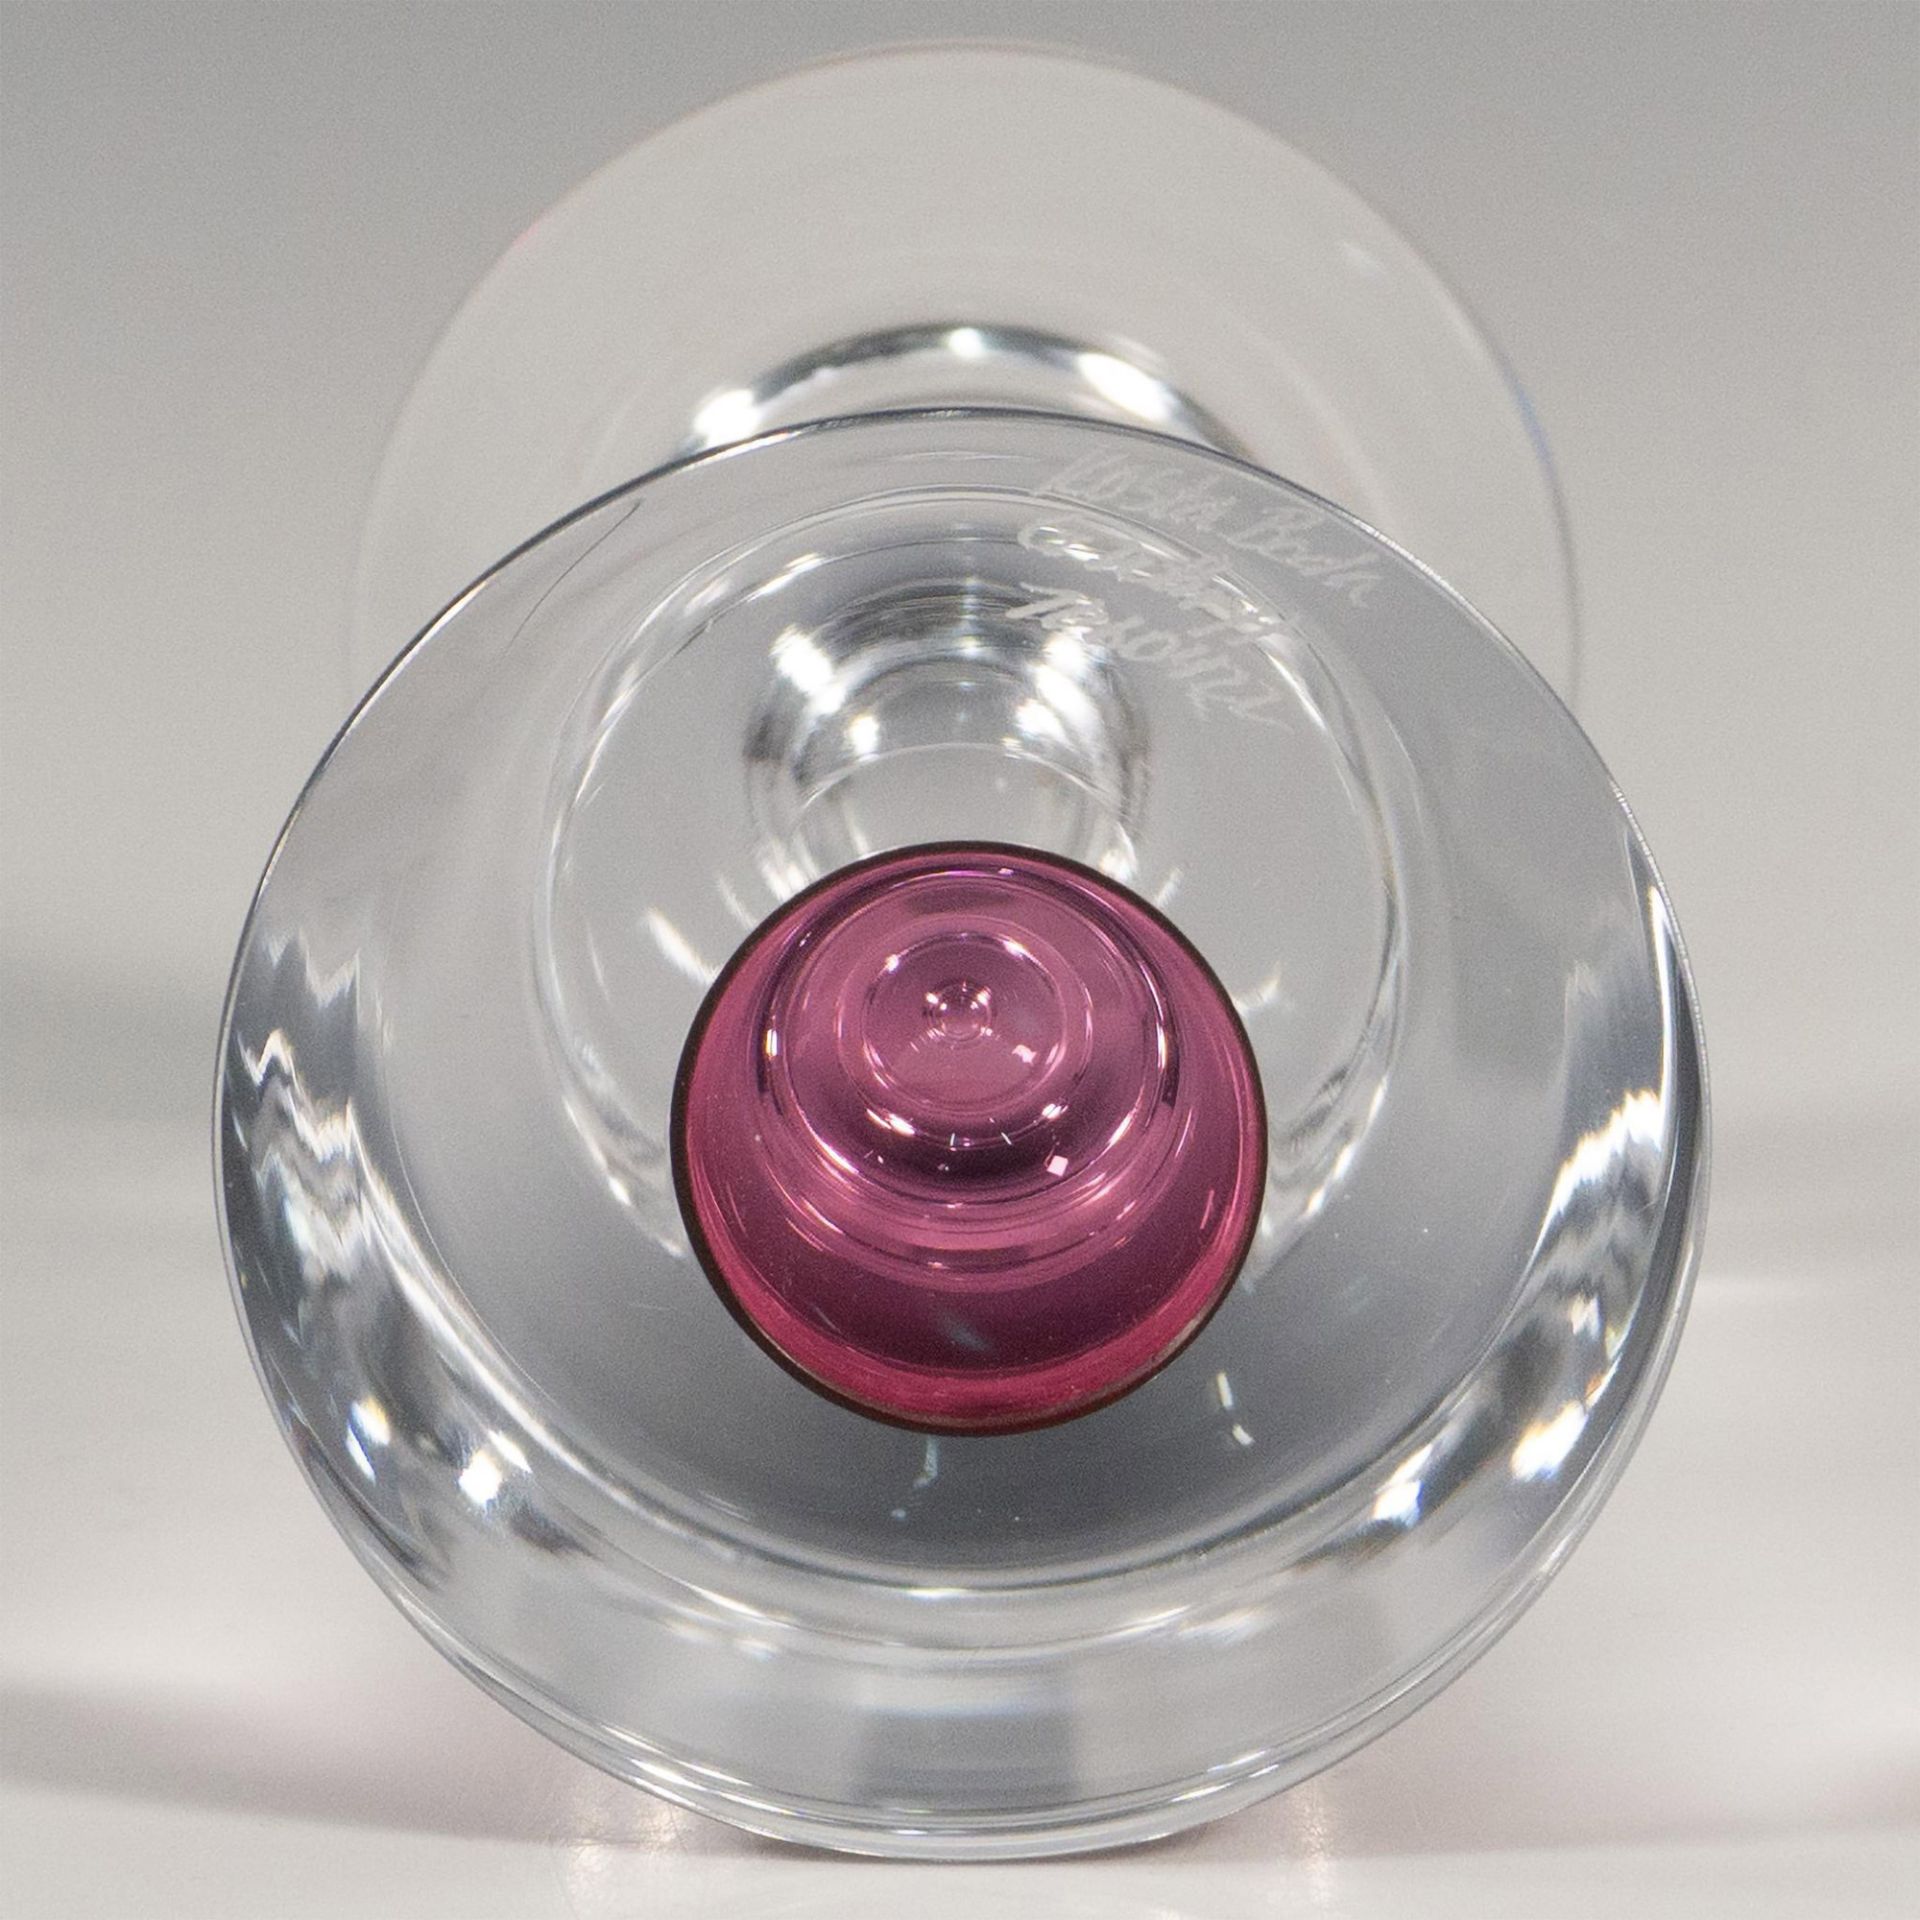 Kosta Boda by Goran Warff Glass Candlestick Holder, Zoom - Image 3 of 4